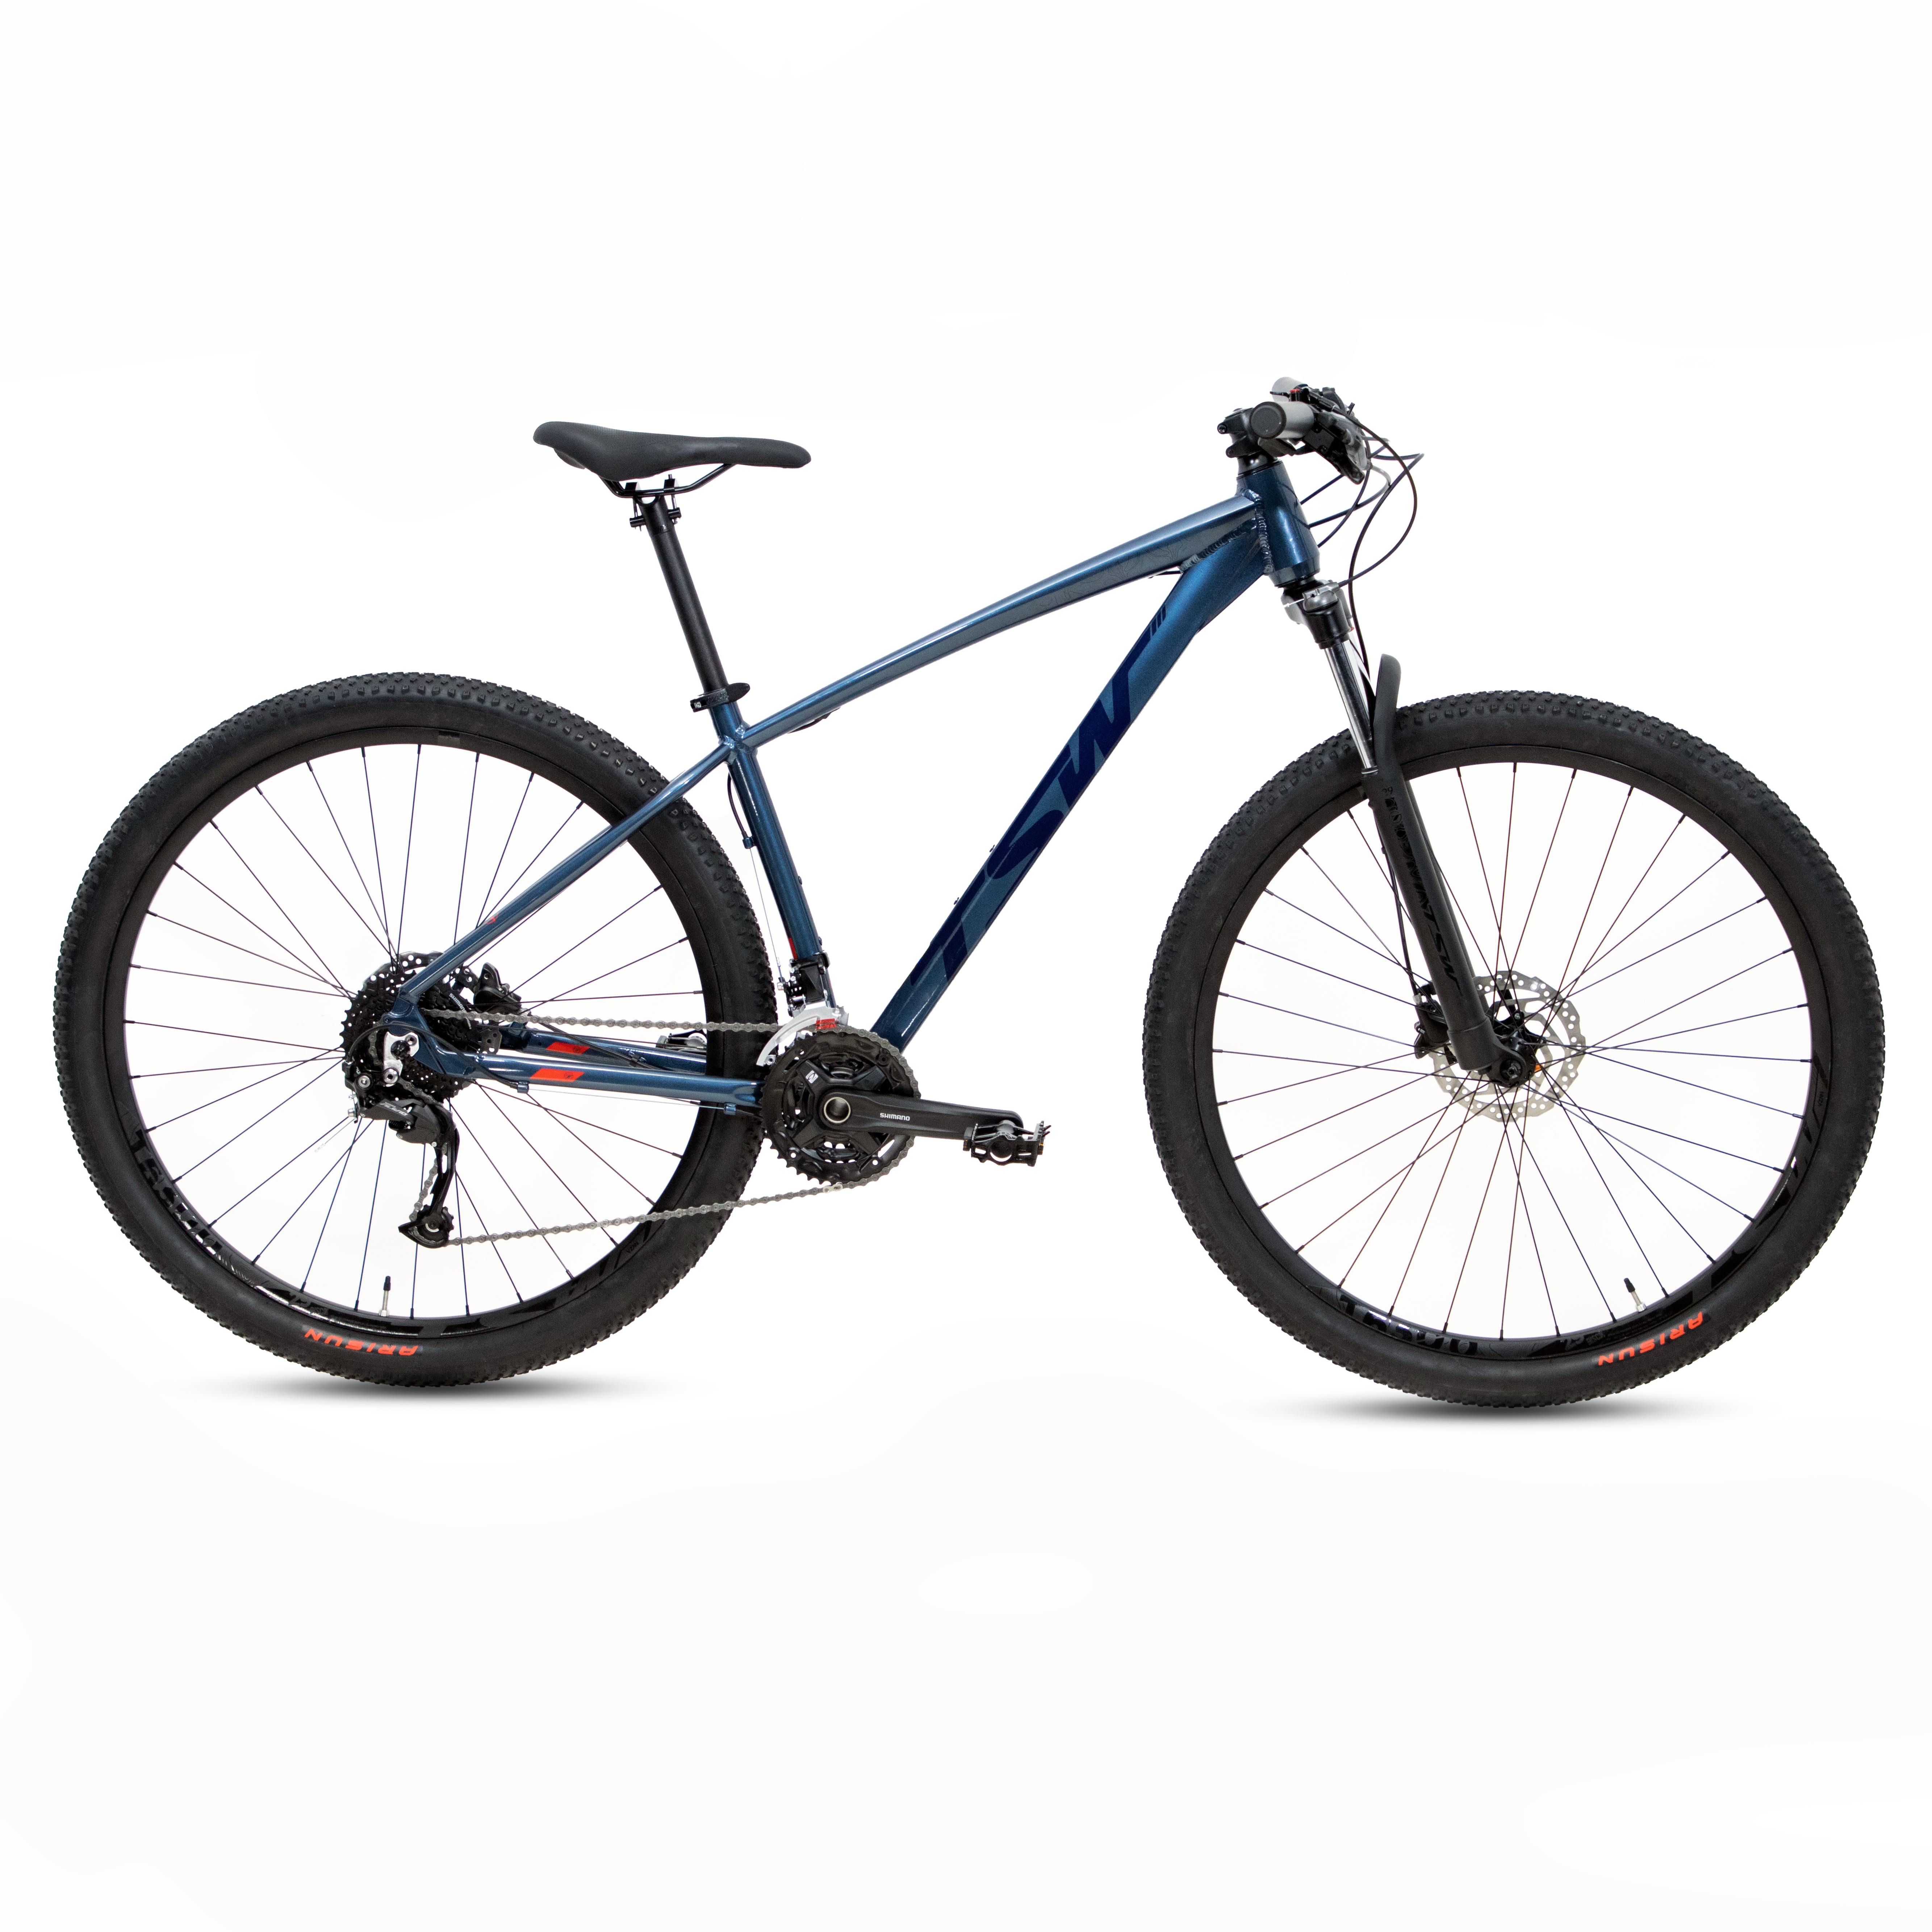 Bicicleta TSW Hunch Plus | 2021/2022 - 15.5", Azul/Preto